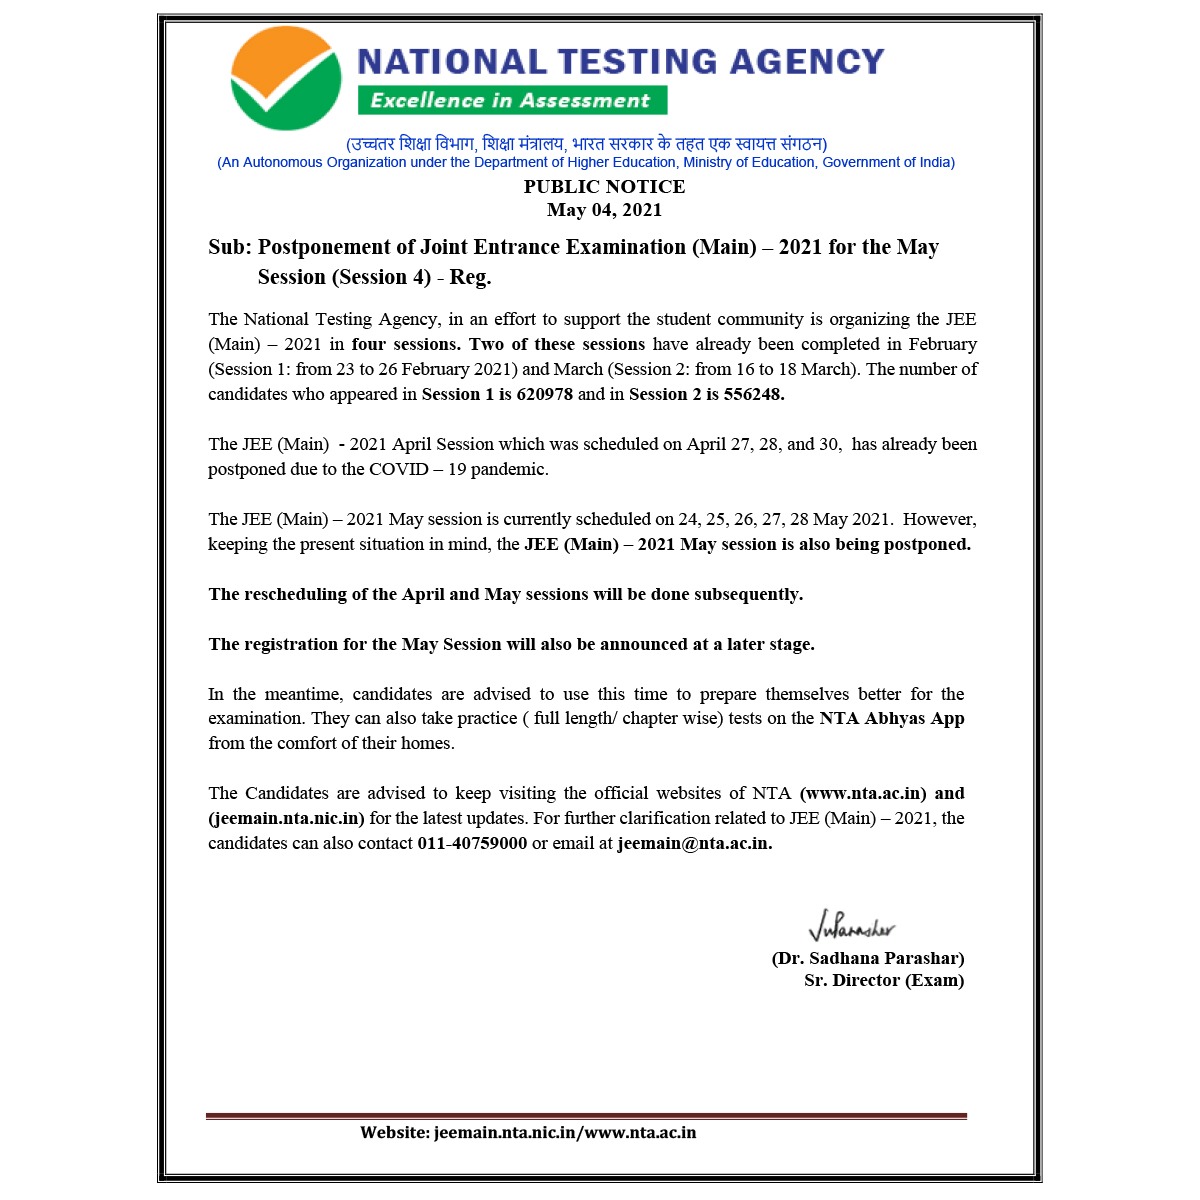 JEE Main May 2021 exam: The National Testing Agency (NTA) has postponed the Joint Entrance Examination (JEE) Main May session.